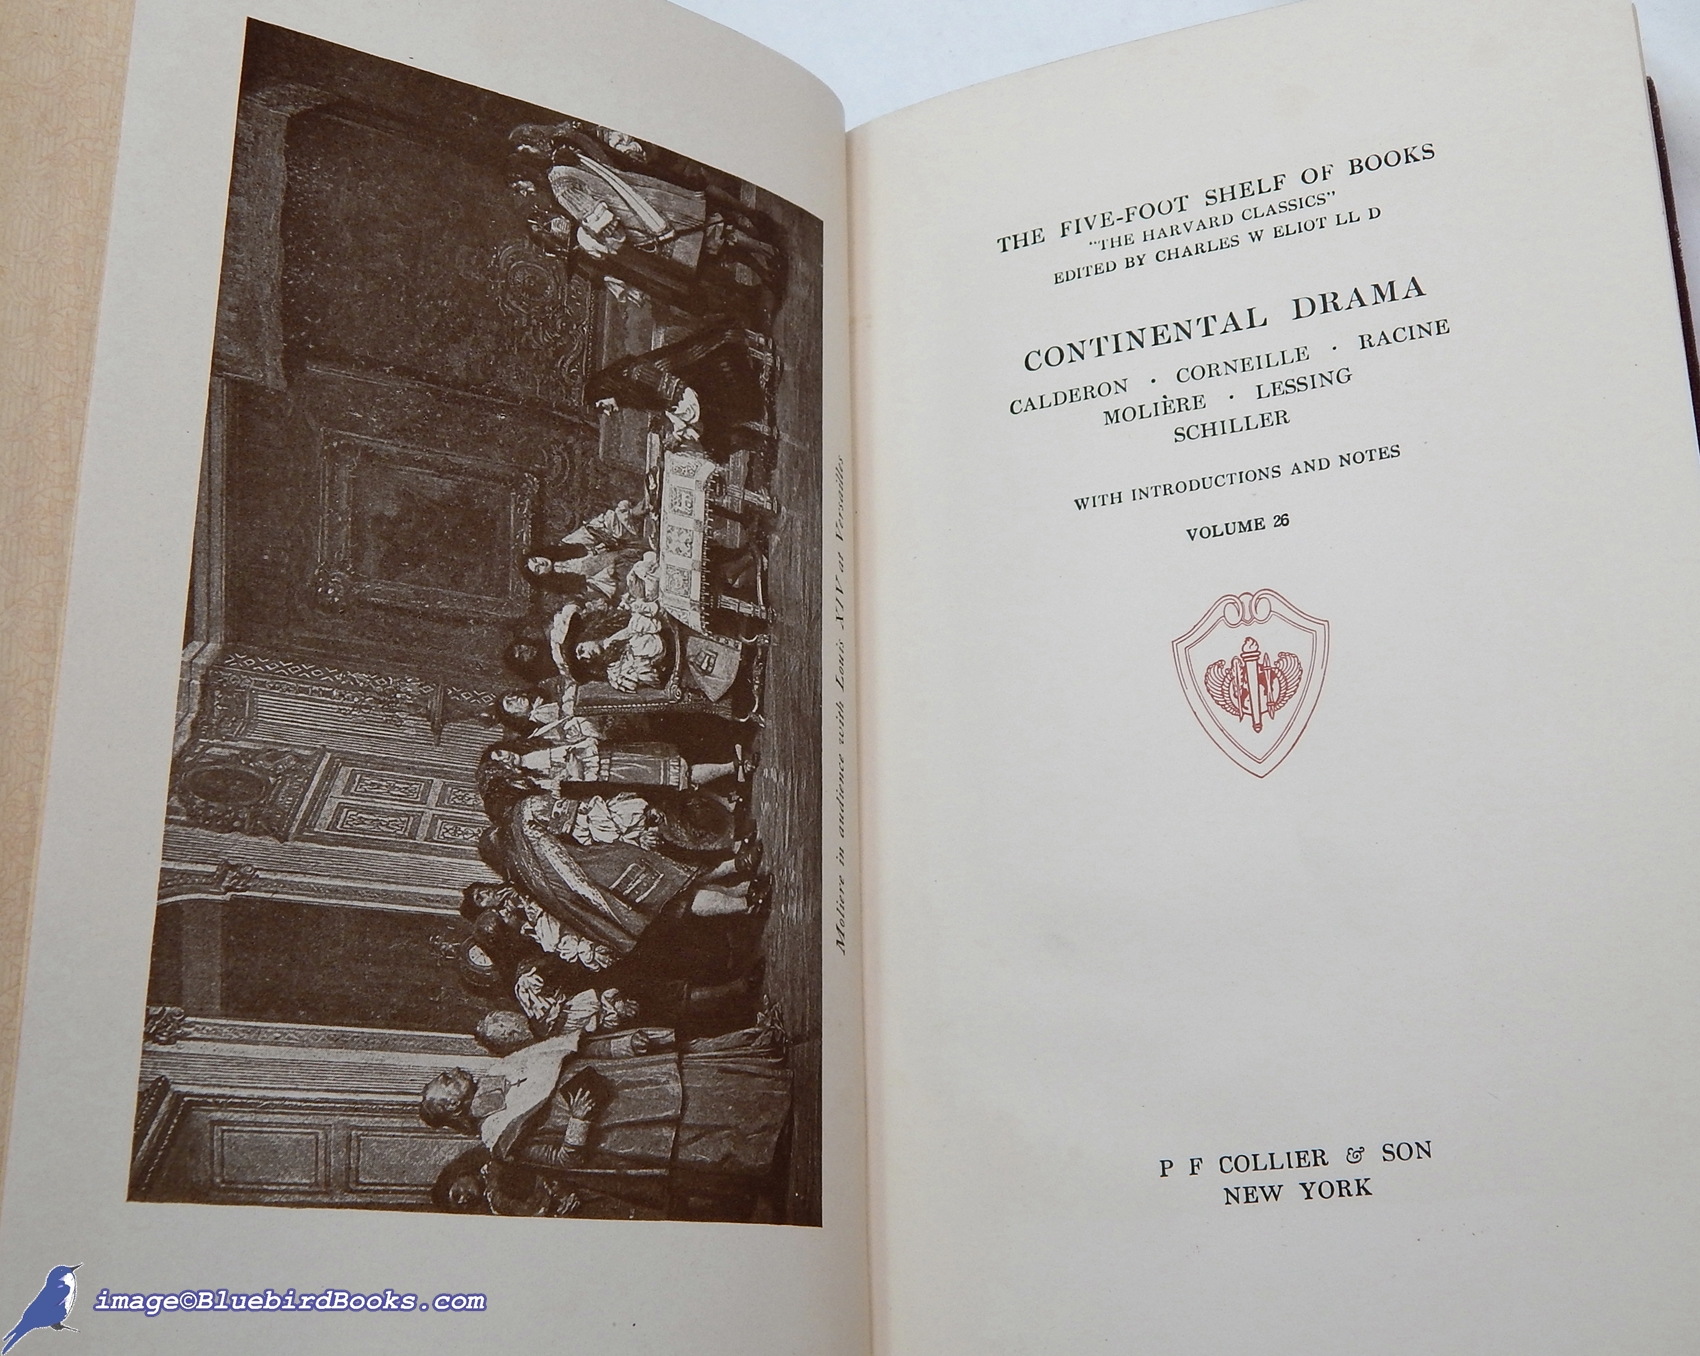 ELIOT, CHARLES W. (EDITOR) - Continental Drama: Calderon - Corneille - Racine - Molire - Lessing - Schiller (#26 in the Five-Foot Shelf of Books Series, 